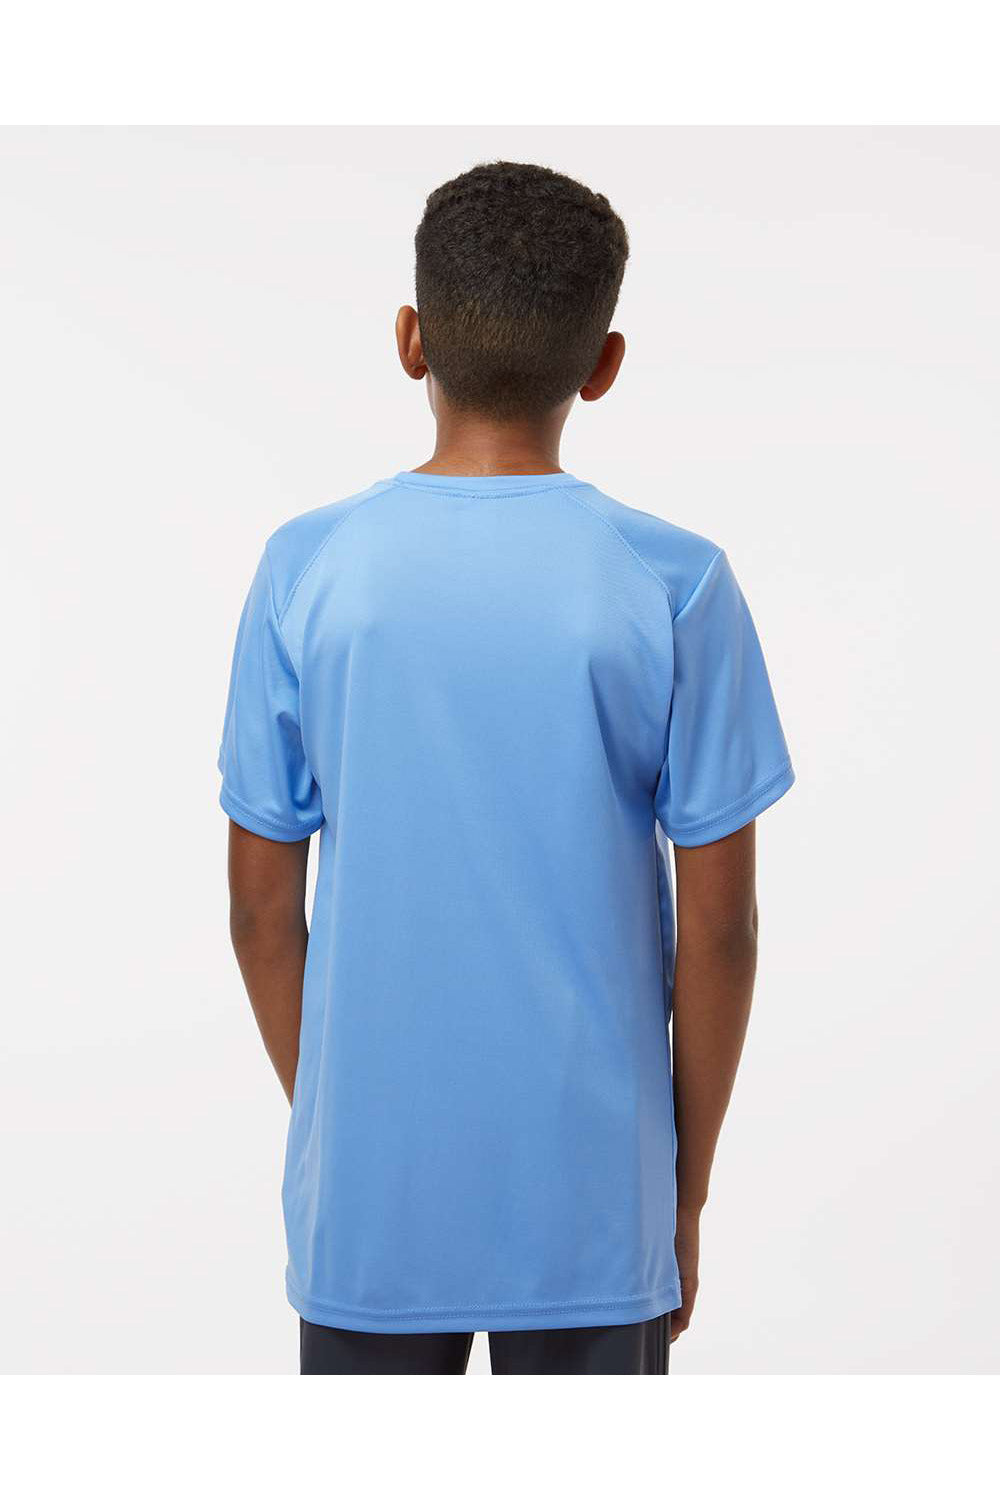 Paragon 208Y Youth Islander Performance Short Sleeve Crewneck T-Shirt Bimini Blue Model Back